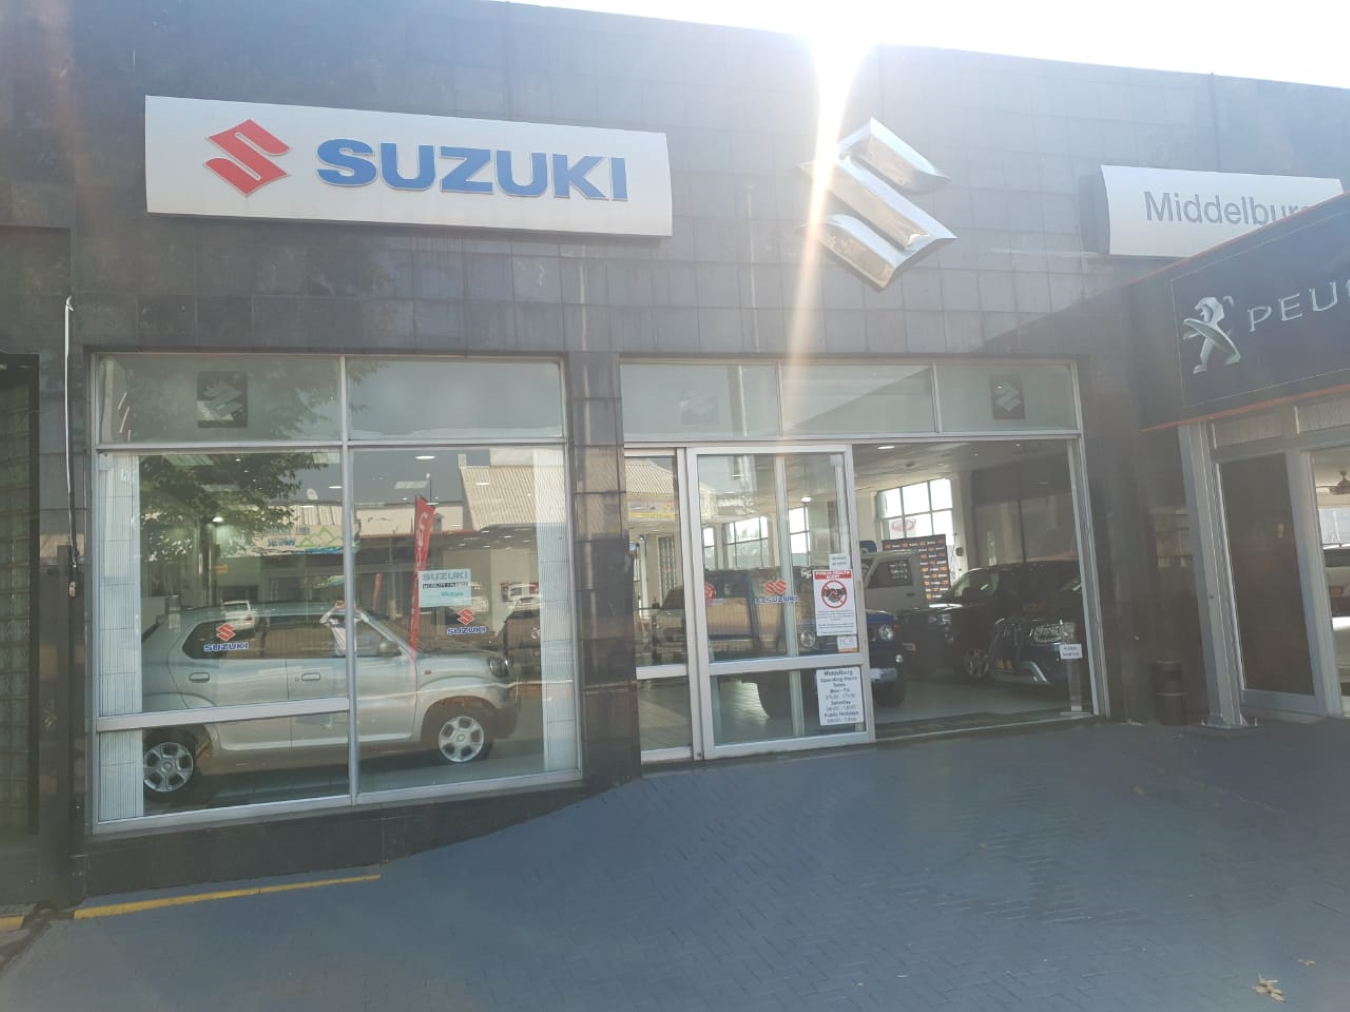 The Suzuki entrance next to the Peugeot/Citroën dealership.